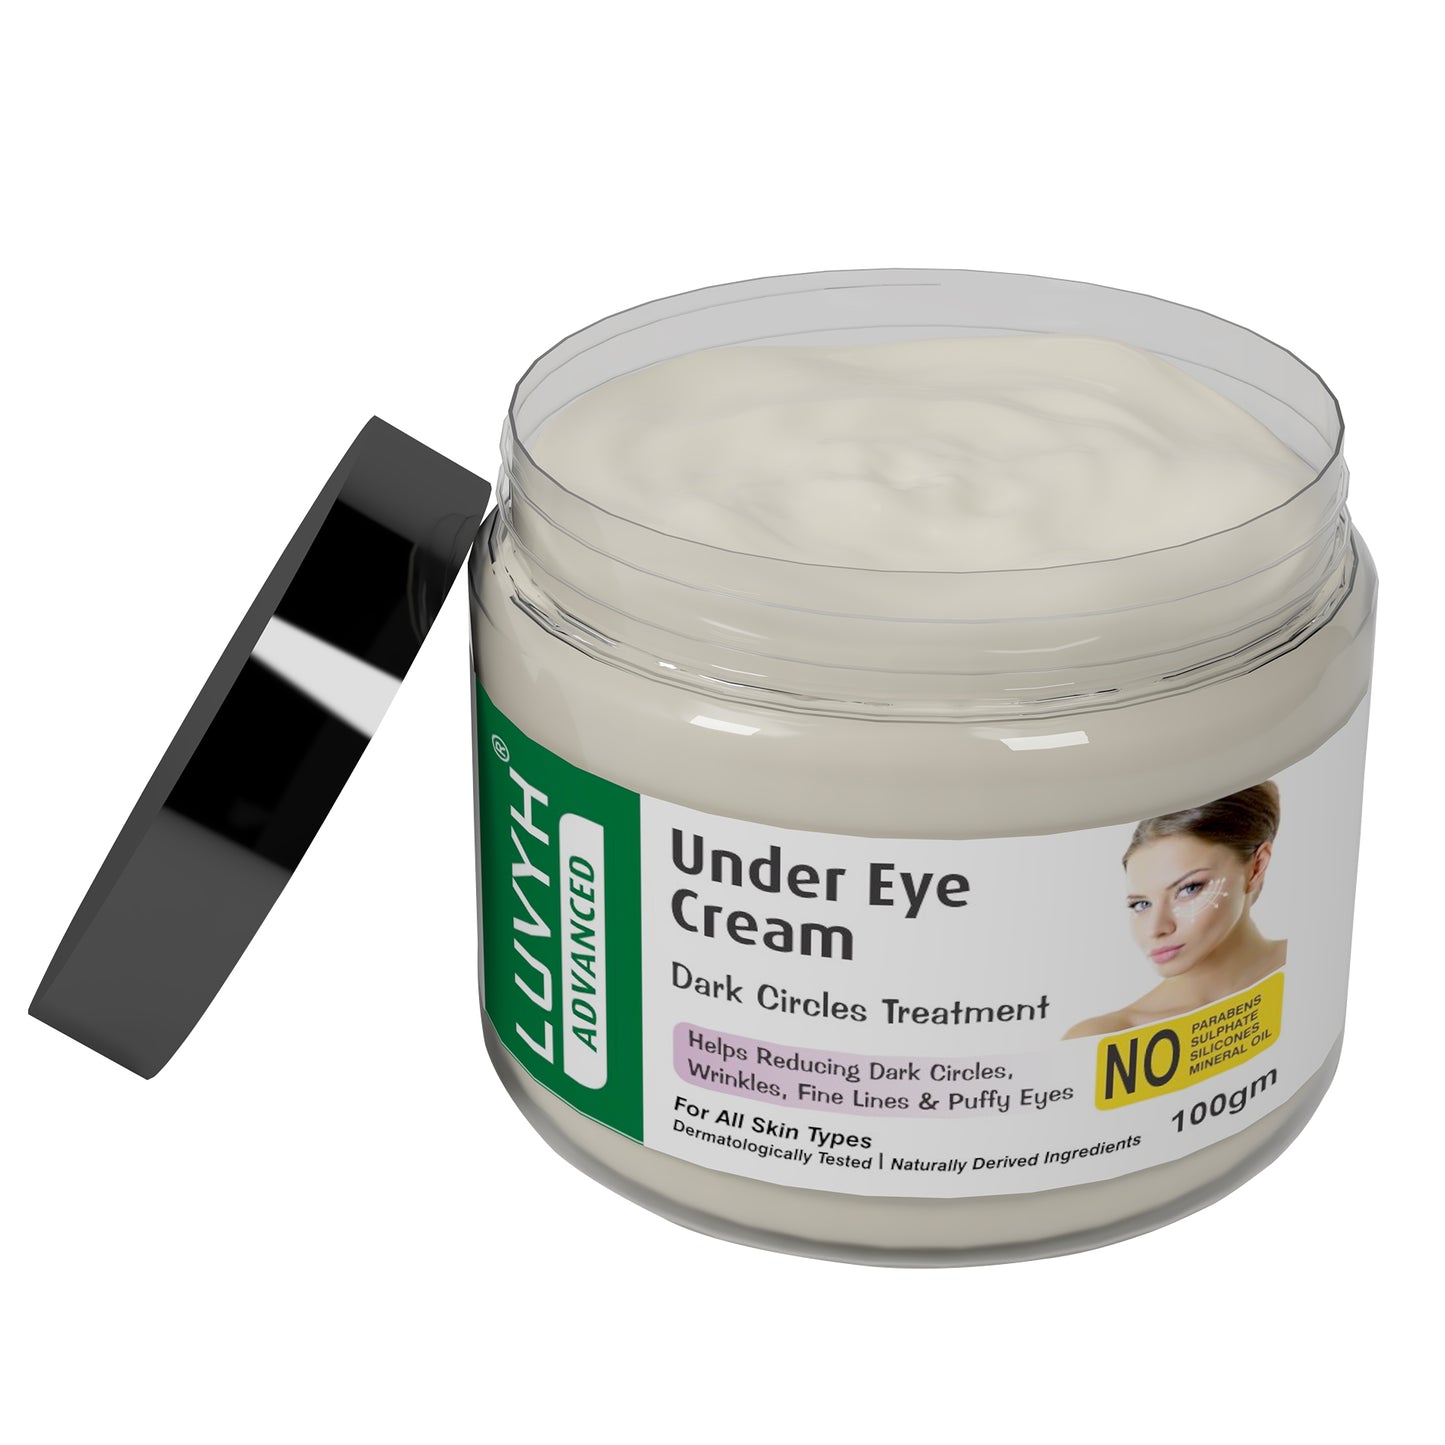 Under Eye Cream for Fine Lines & Puffy Eyes